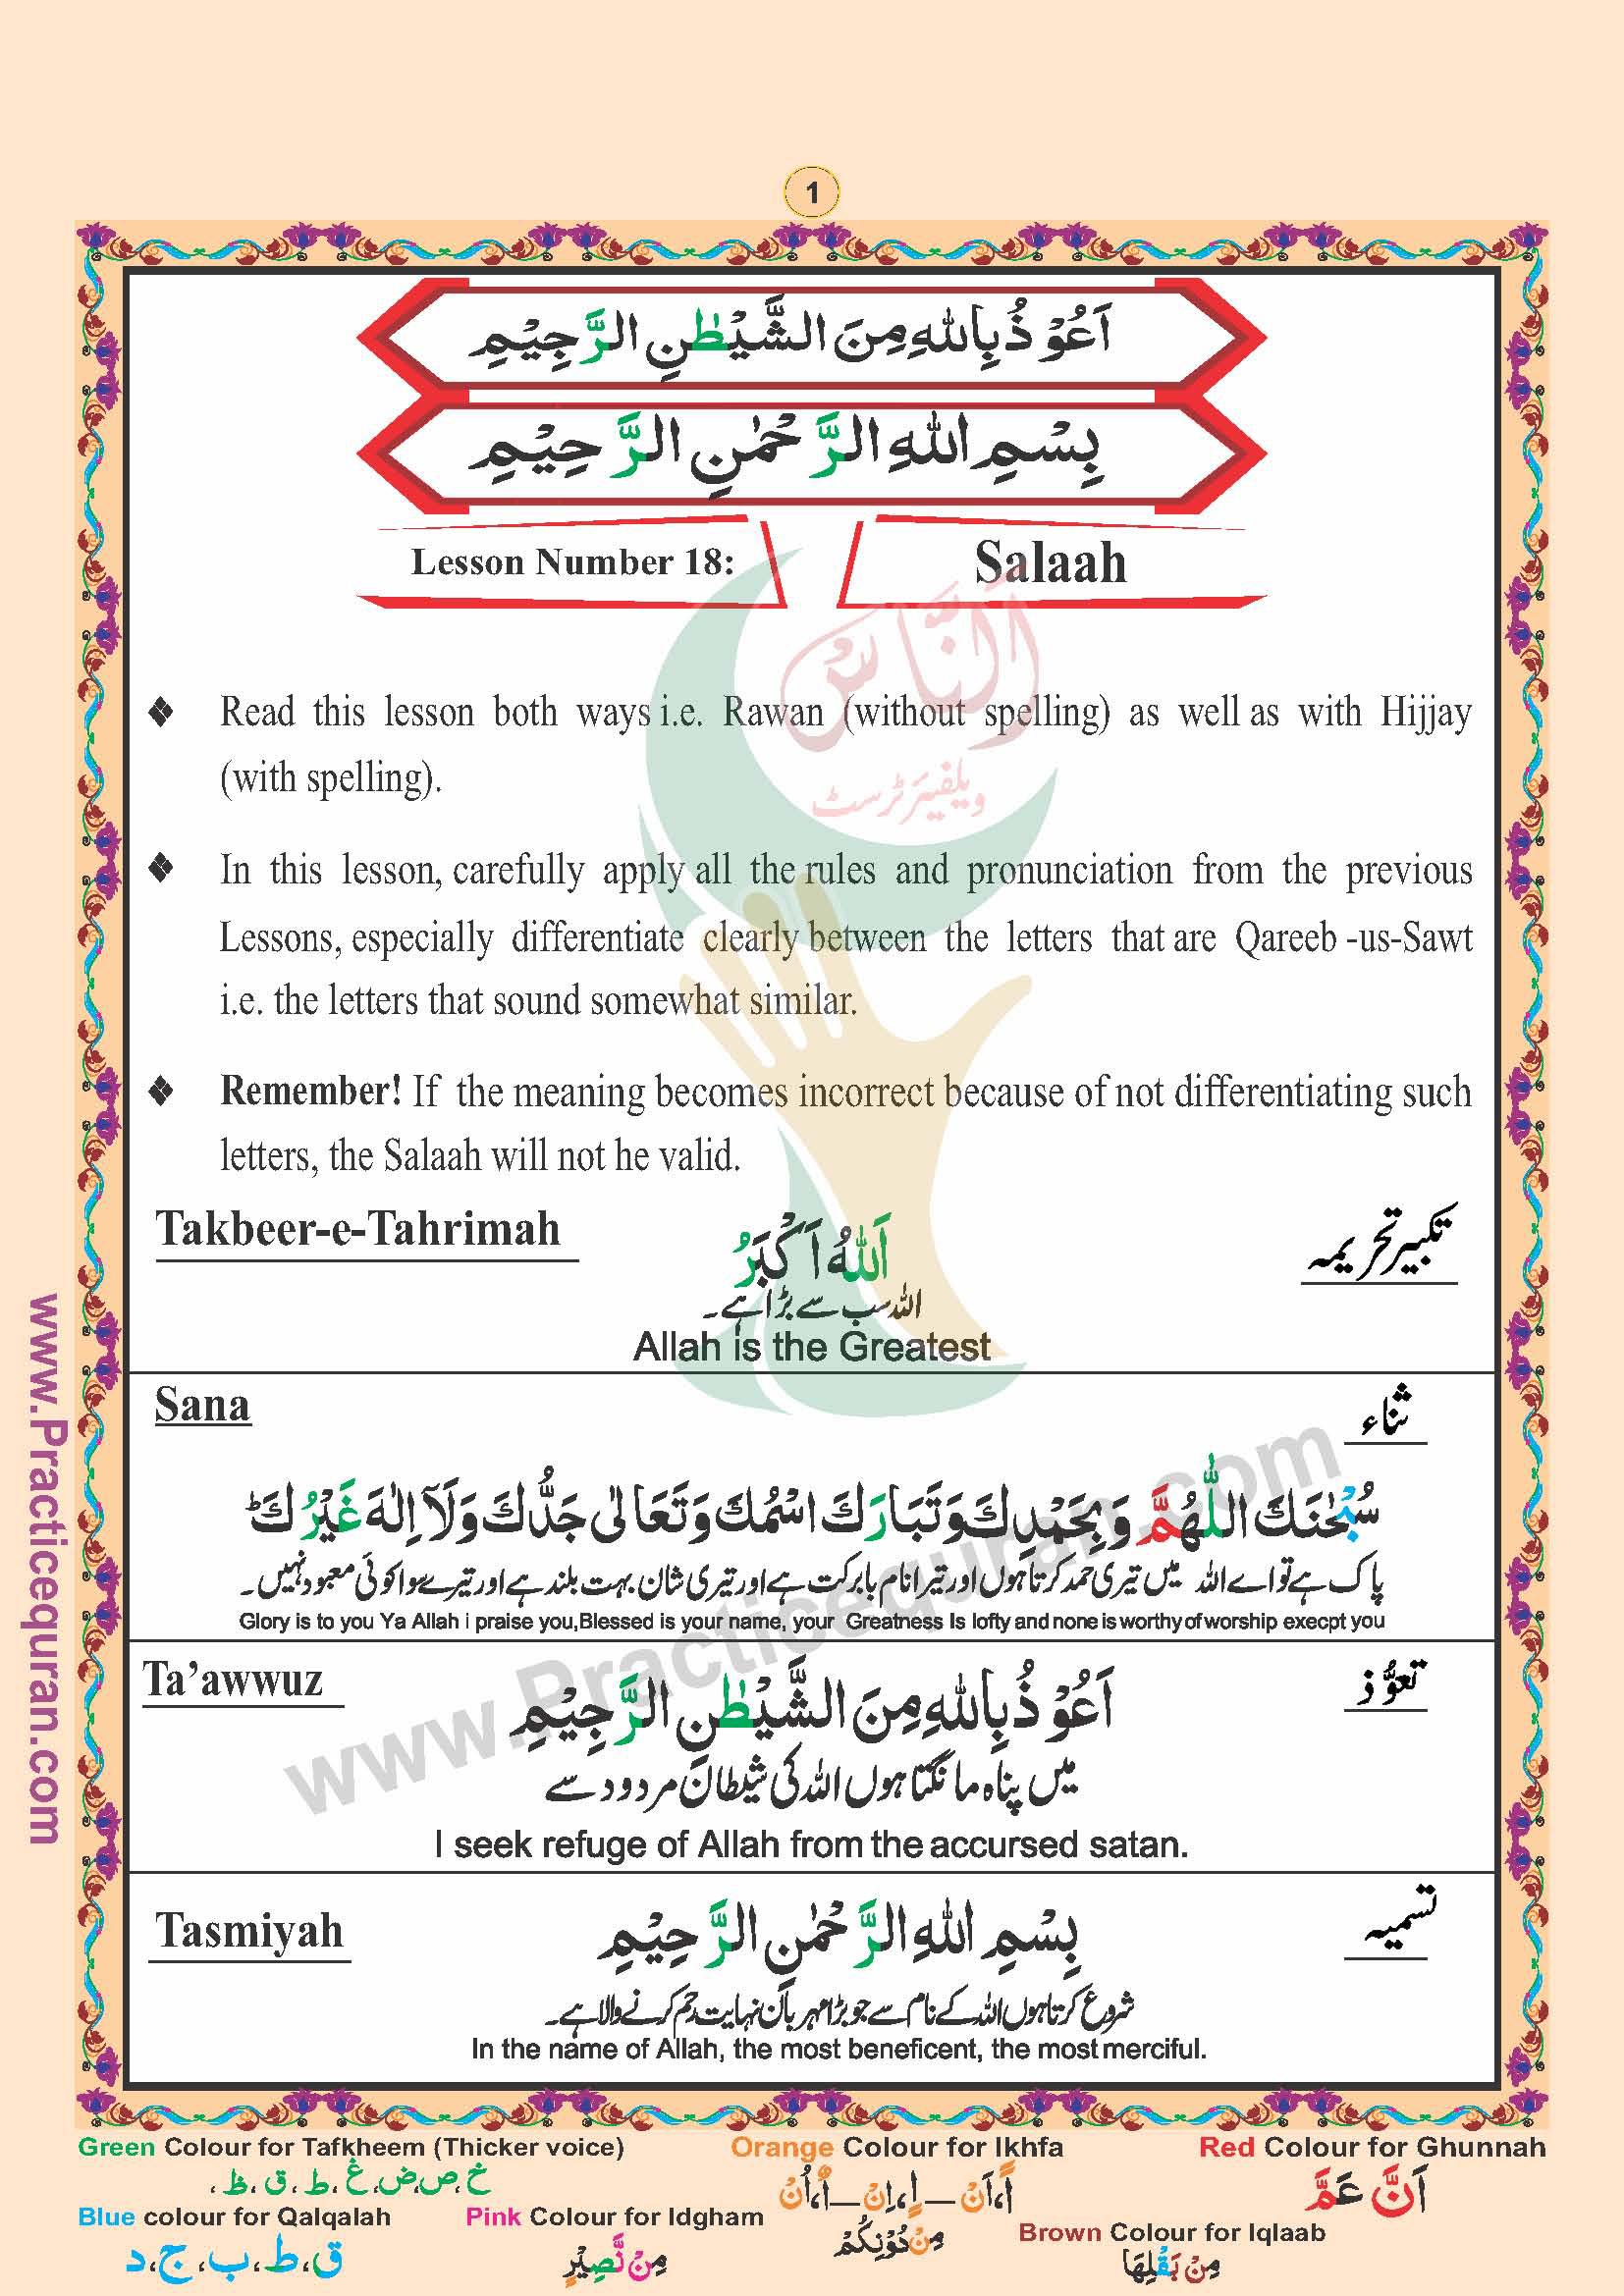 Read Namaz (Salah) Page No 1, Practice Quran